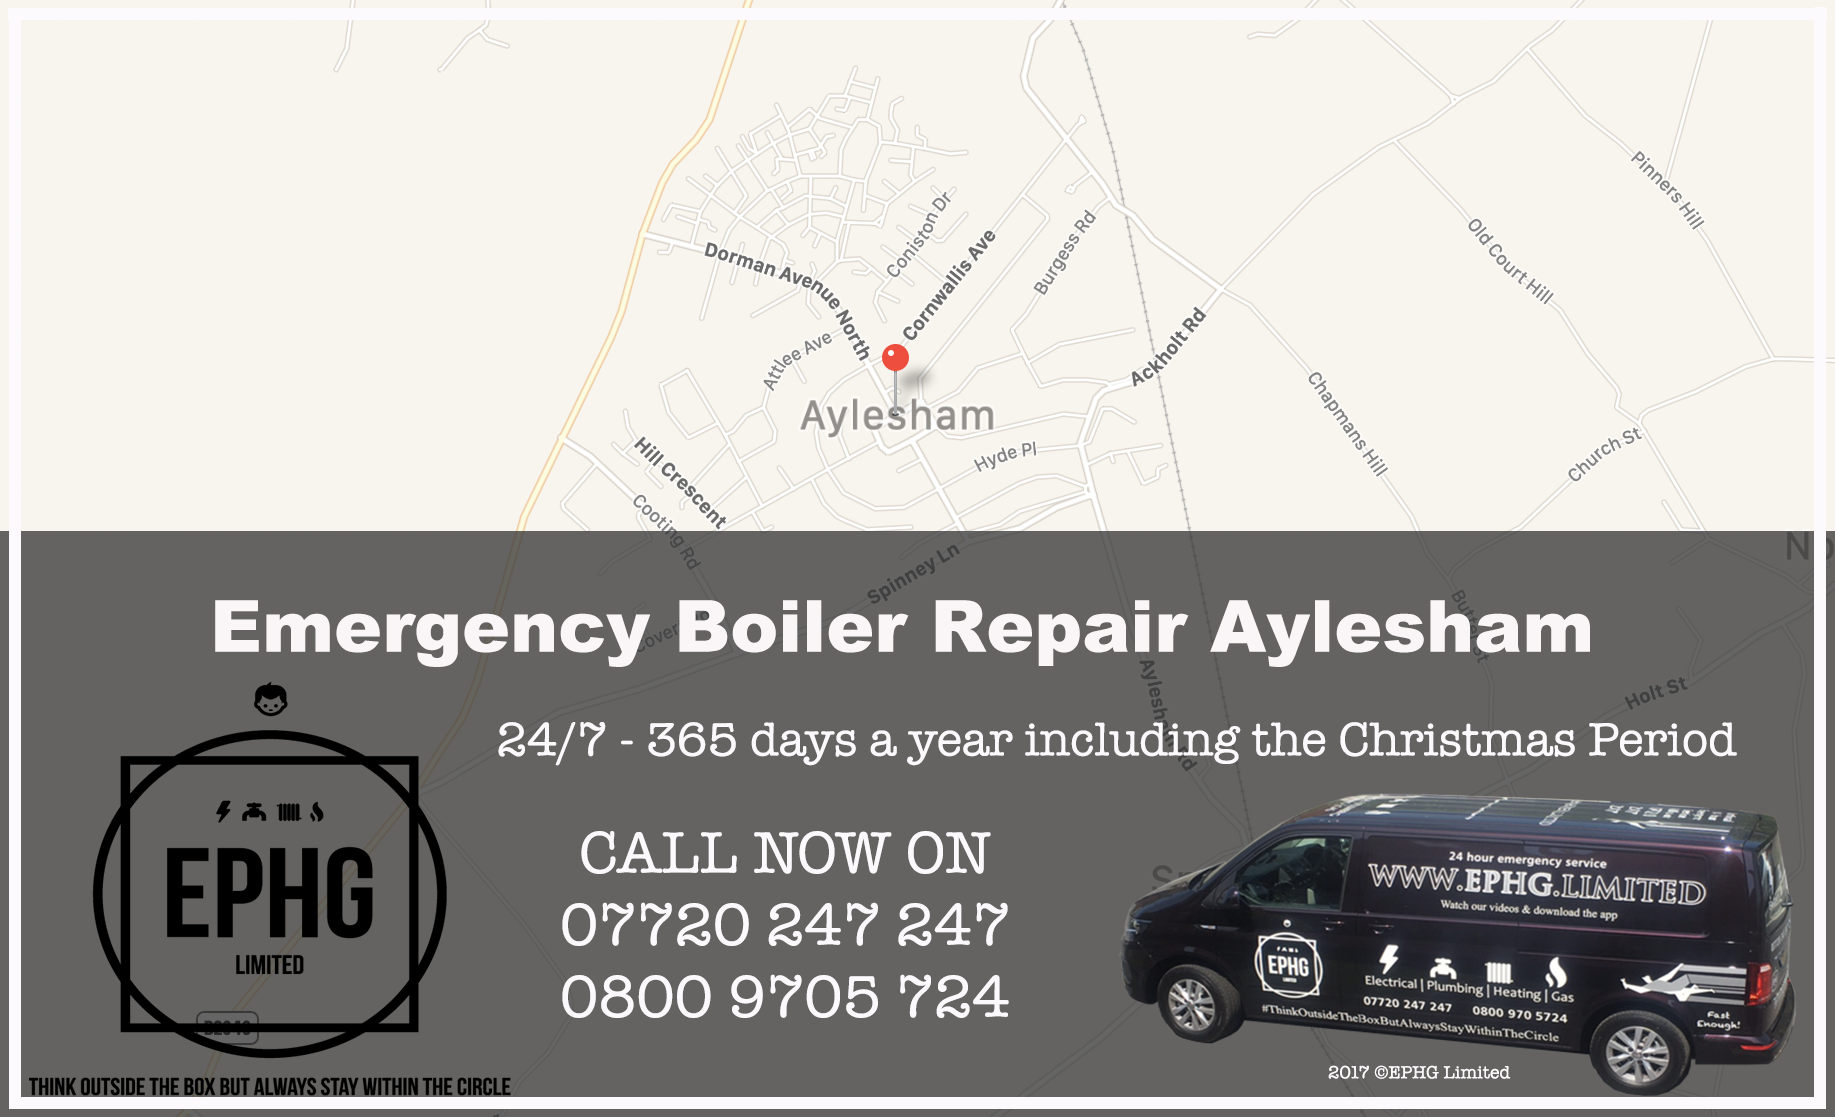 24 Hour Emergency Boiler Repair Aylsham